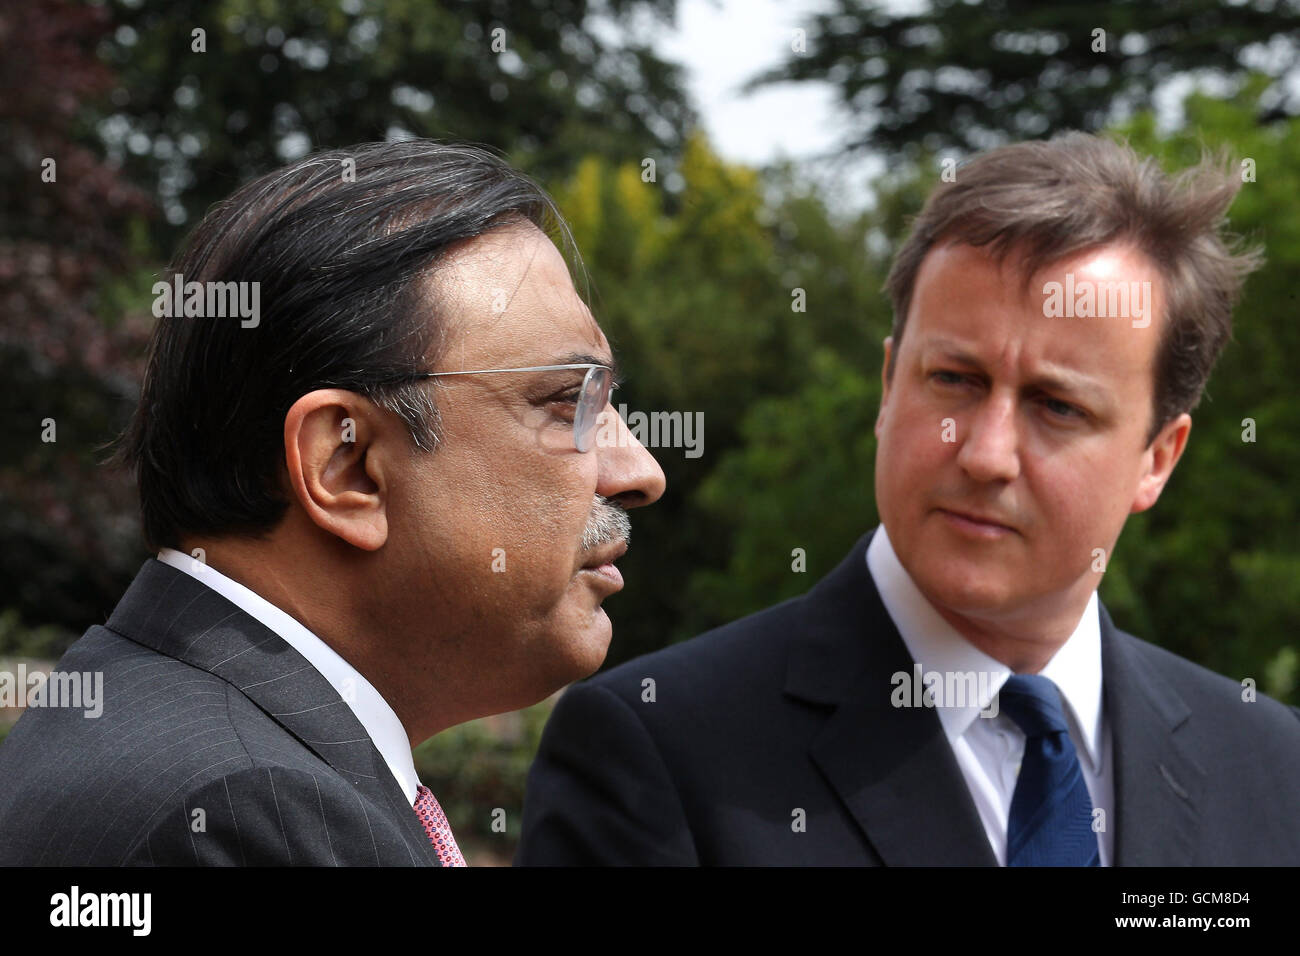 Prime Minister David Cameron (right) looks at Pakistan's President Asif Ali Zardari as they speak to reporters at Chequers near Princes Risborough, England. Stock Photo